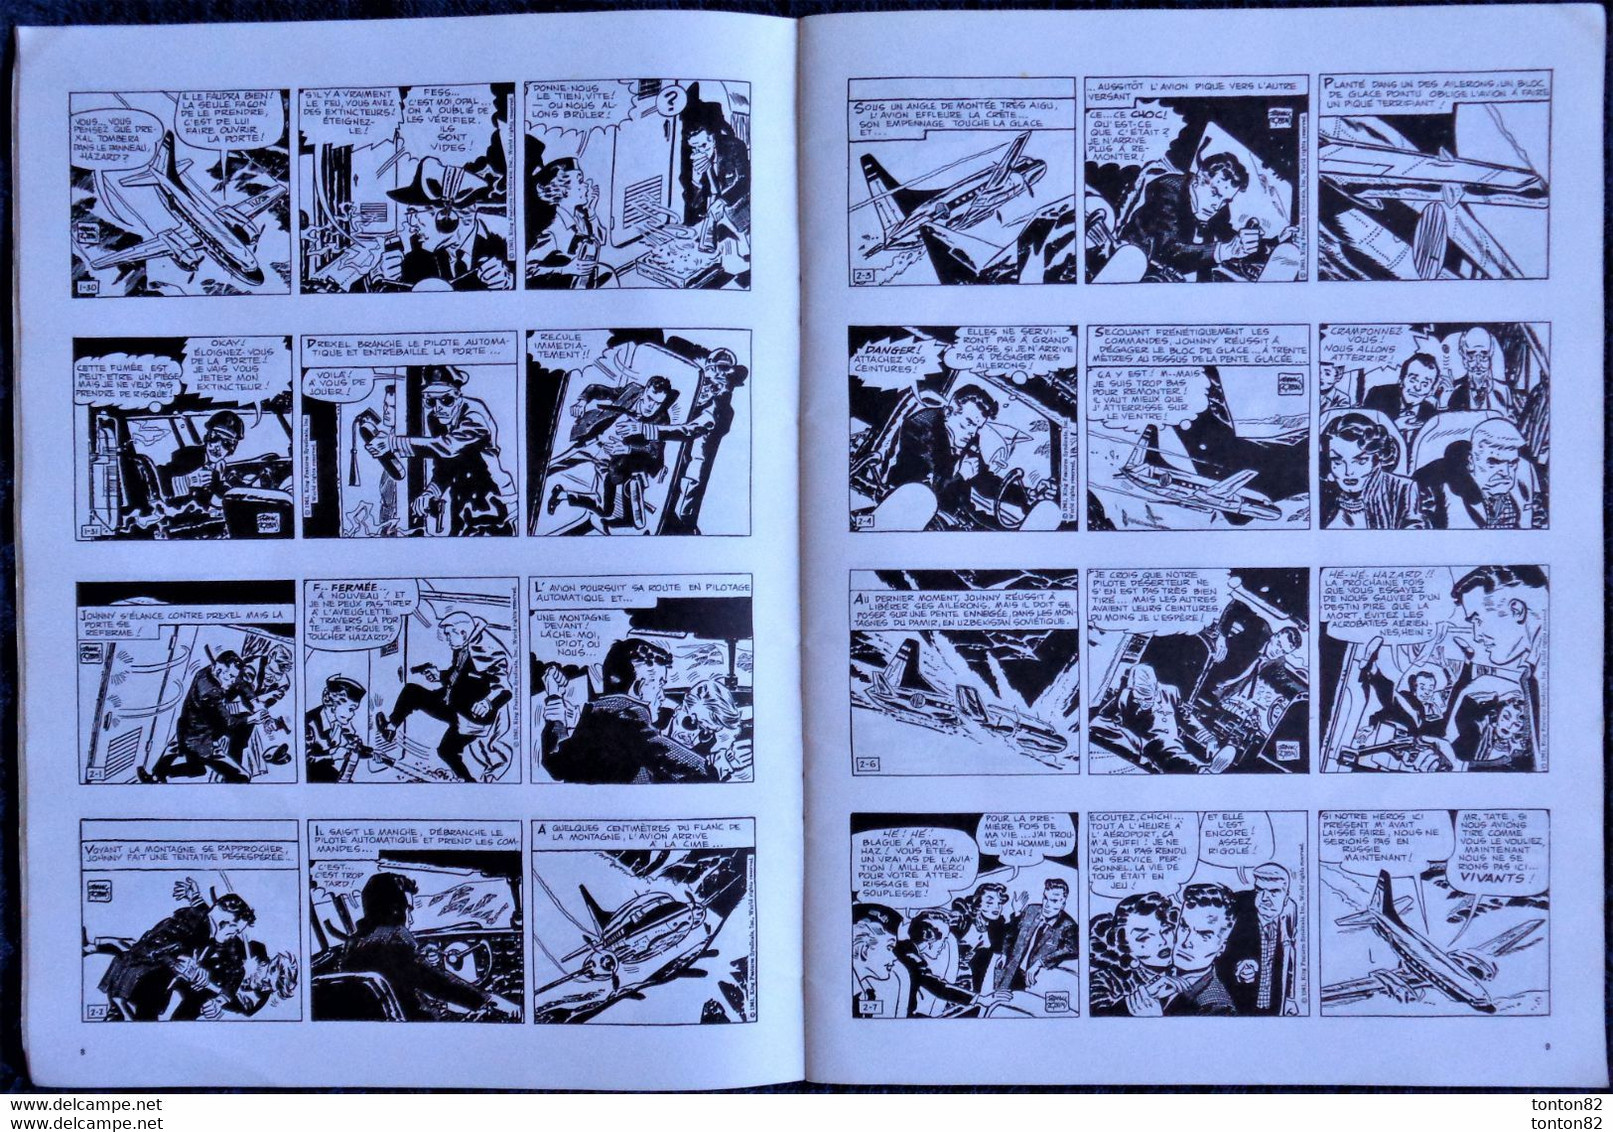 Frank Robbins - Johnny Hazard - Bandes Quotidiennes 1961 - Éditions FOCUS -  ( E.O 1979) . - Margerin